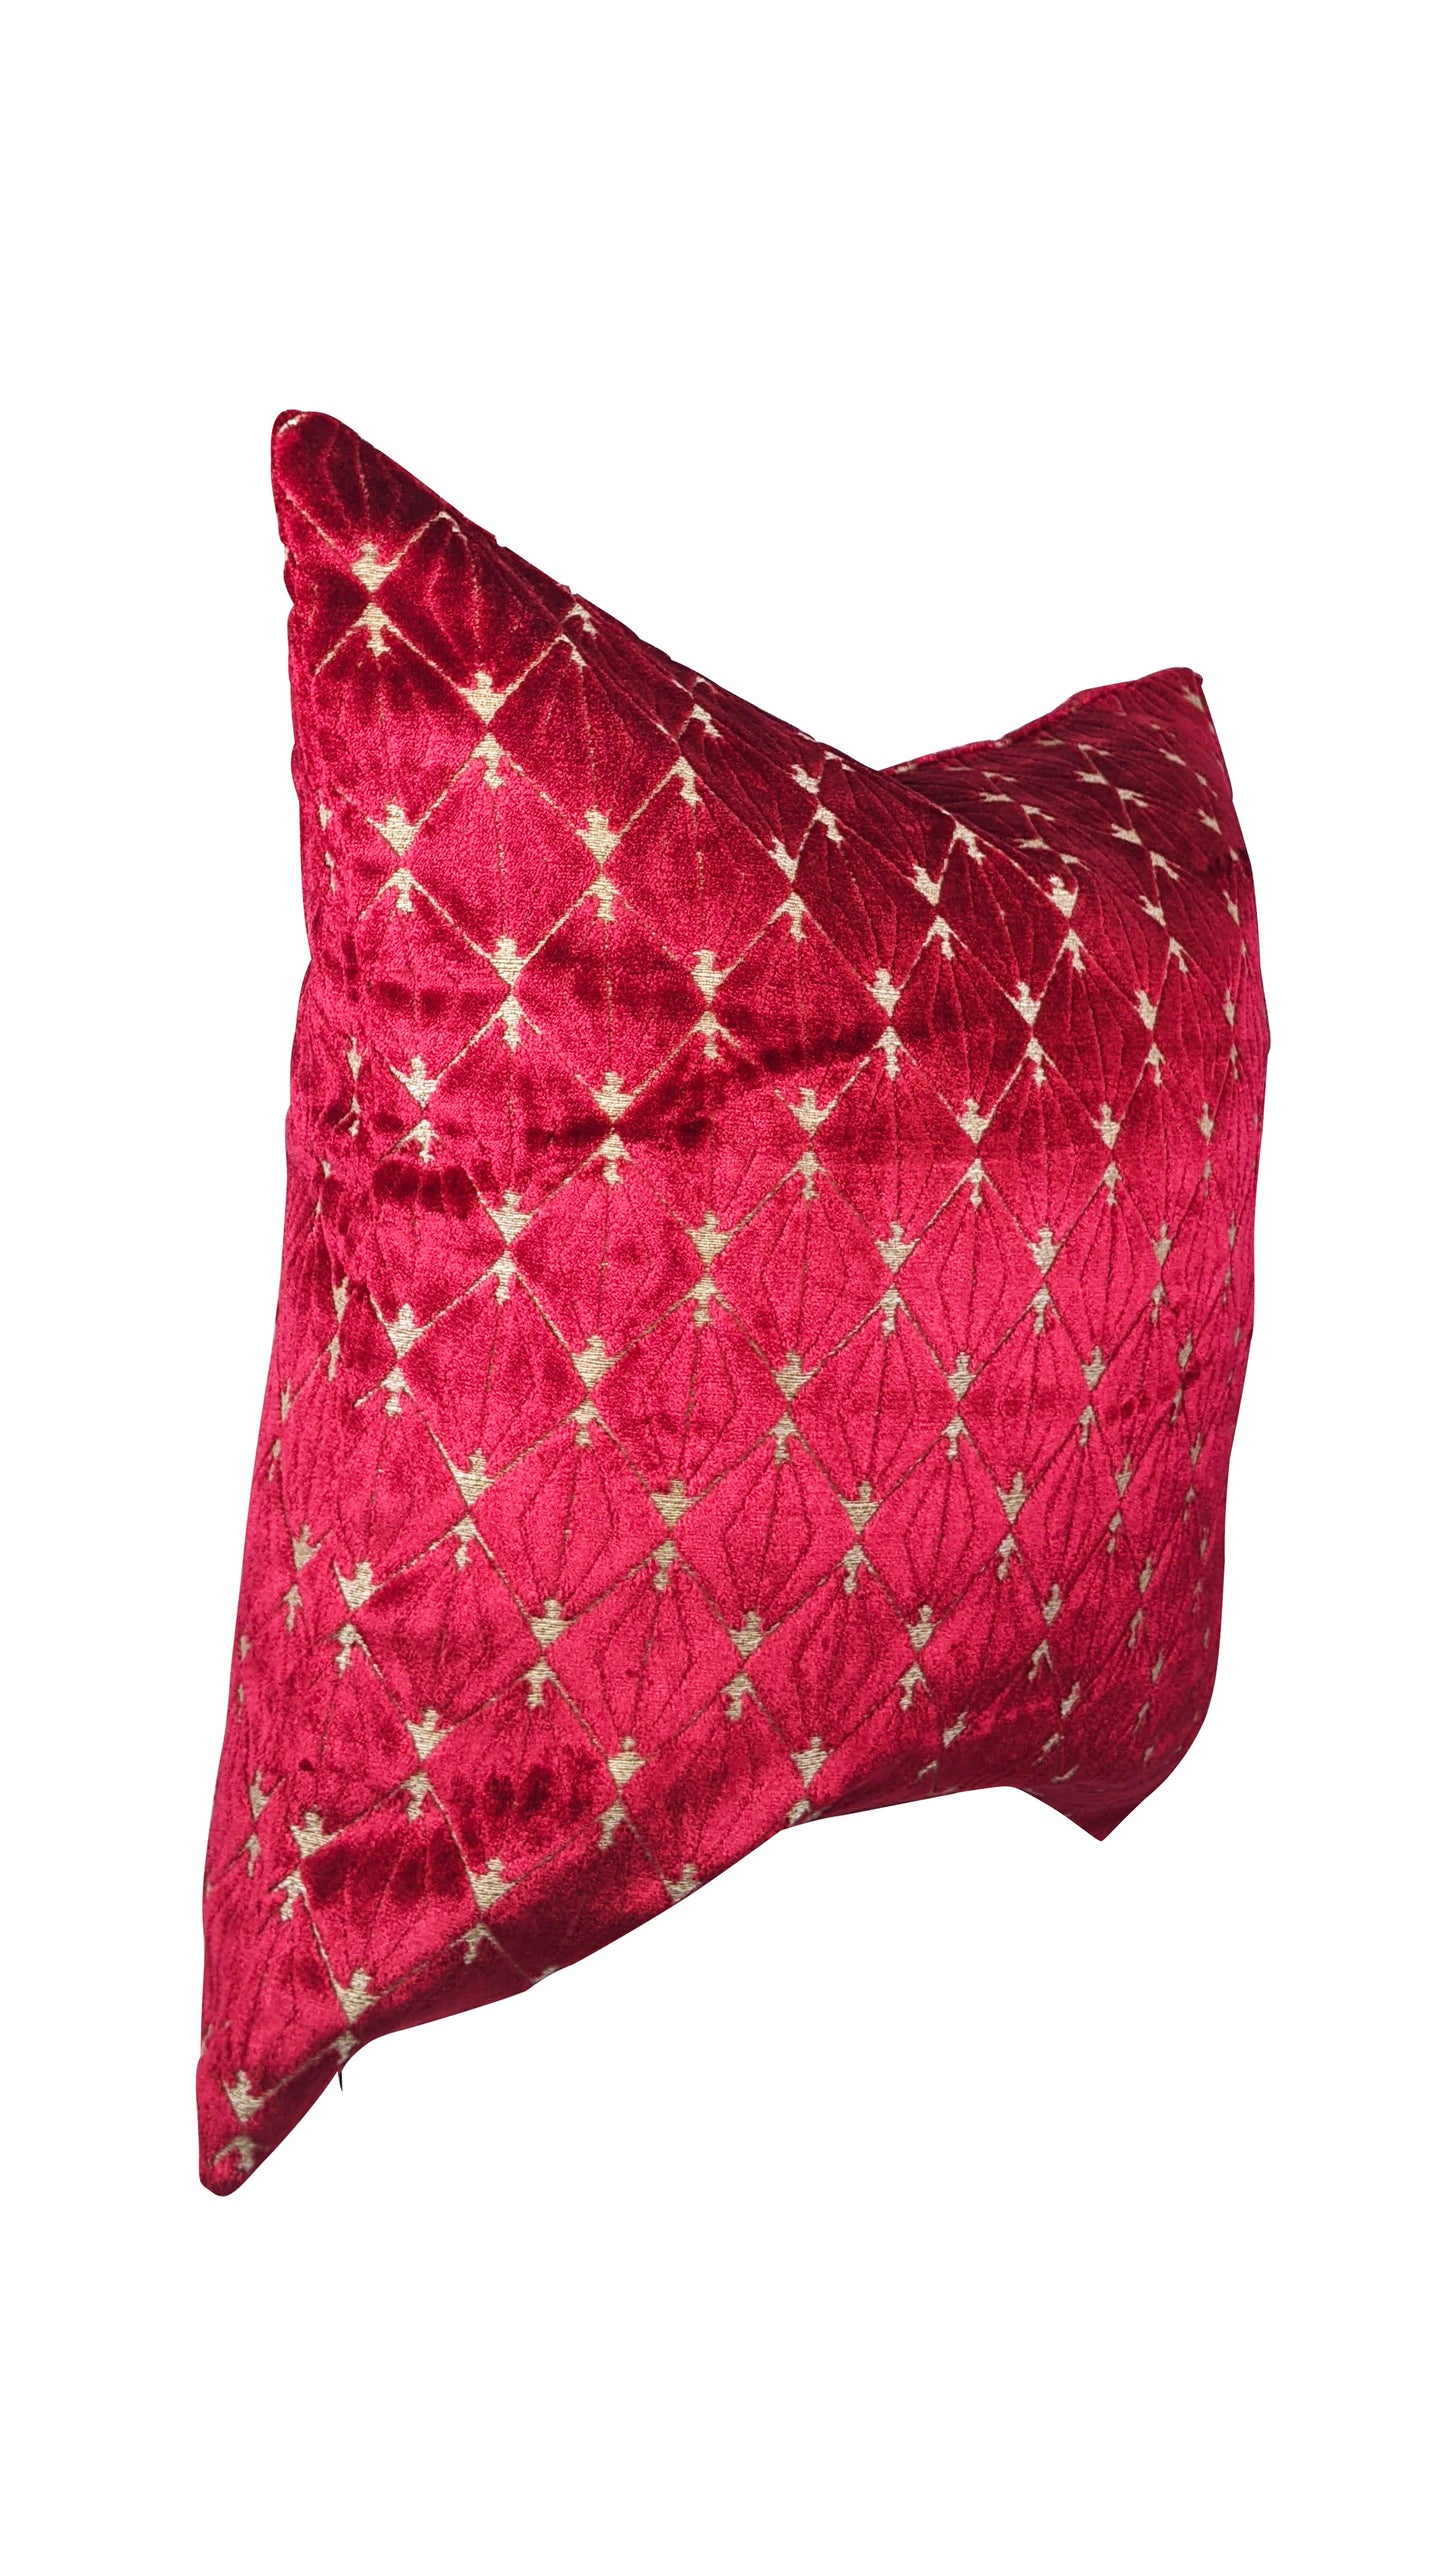 Crimson Red Pillow